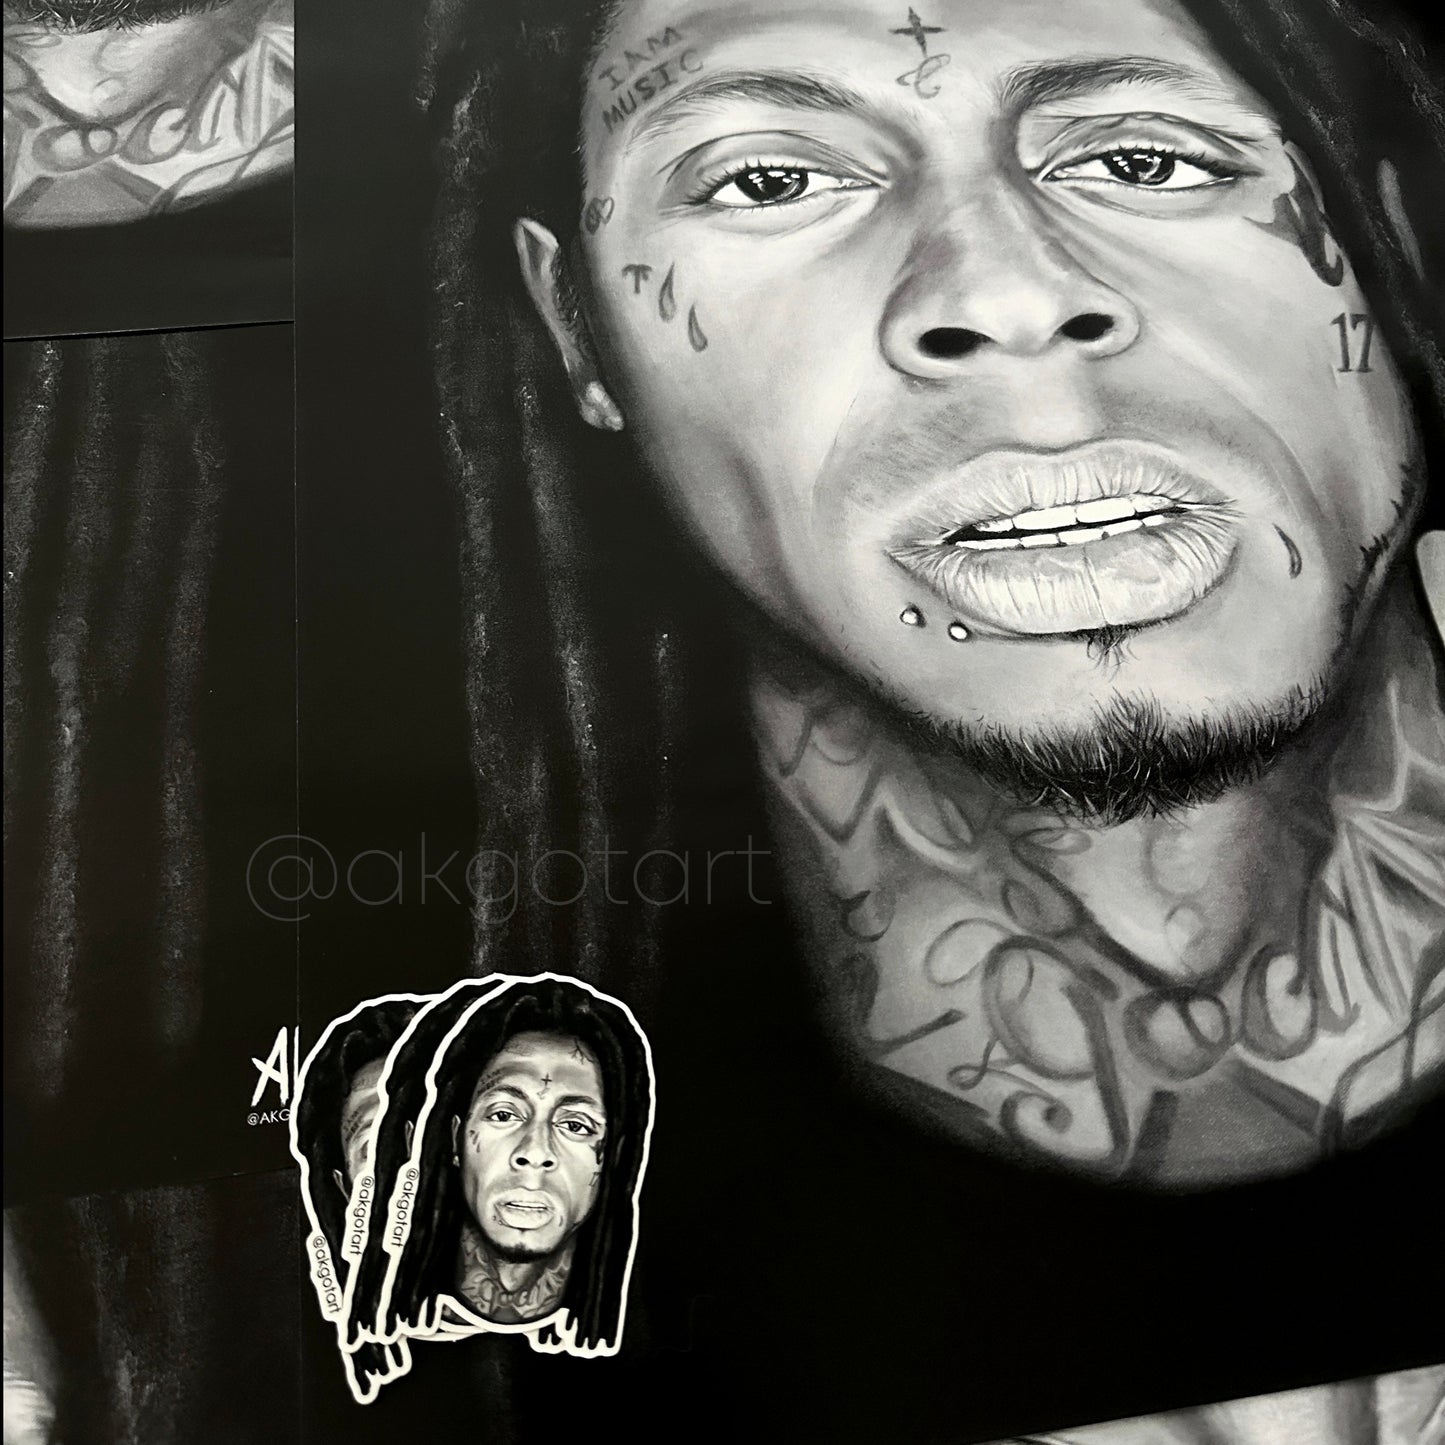 Lil Wayne 'Top 5' Poster Print